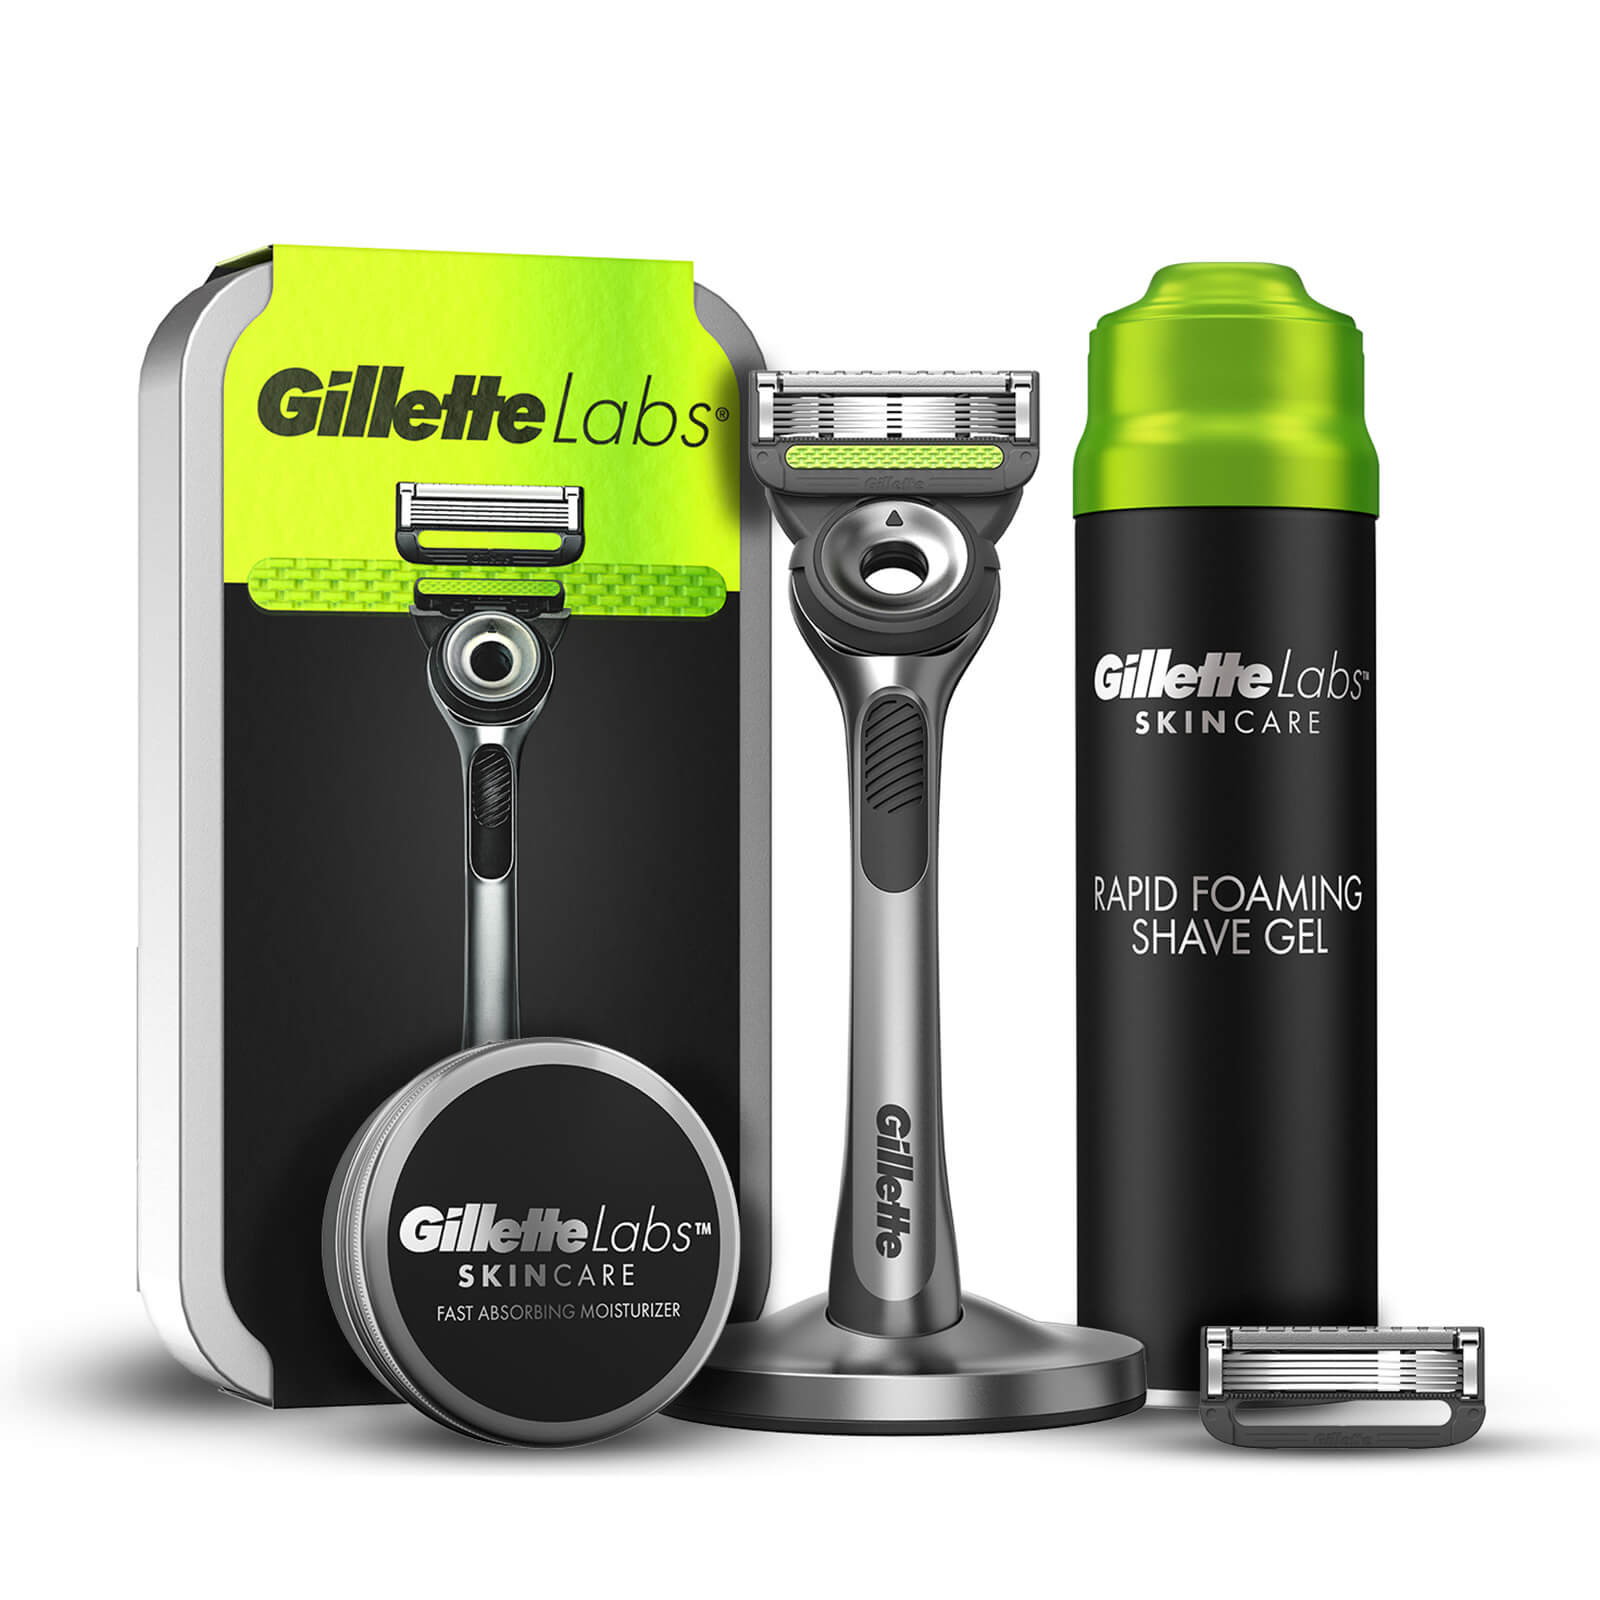 Gillette Labs Razor with Exfoliating Bar  Travel Case  4 Blades Refills  Shaving Gel  Moisturiser